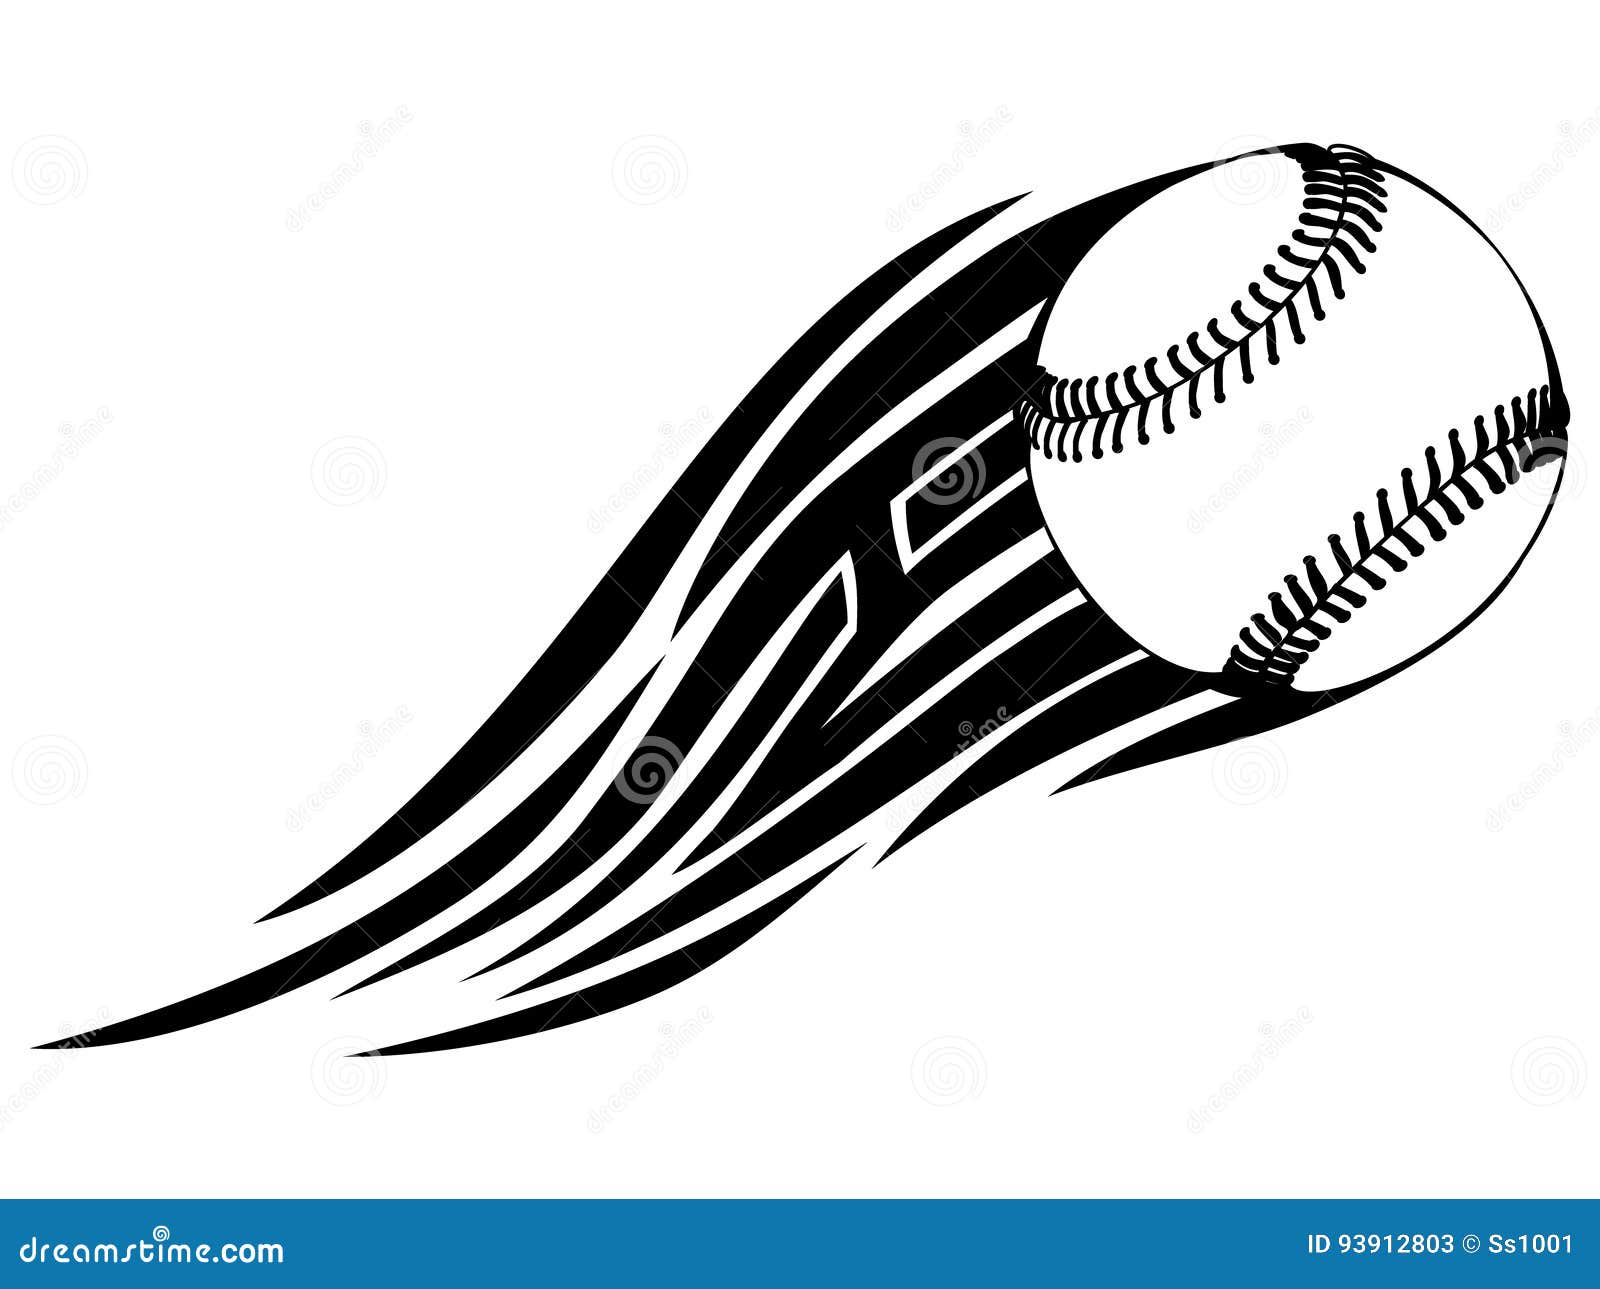 baseball-ilustra-o-do-vetor-ilustra-o-de-batida-liga-93912803